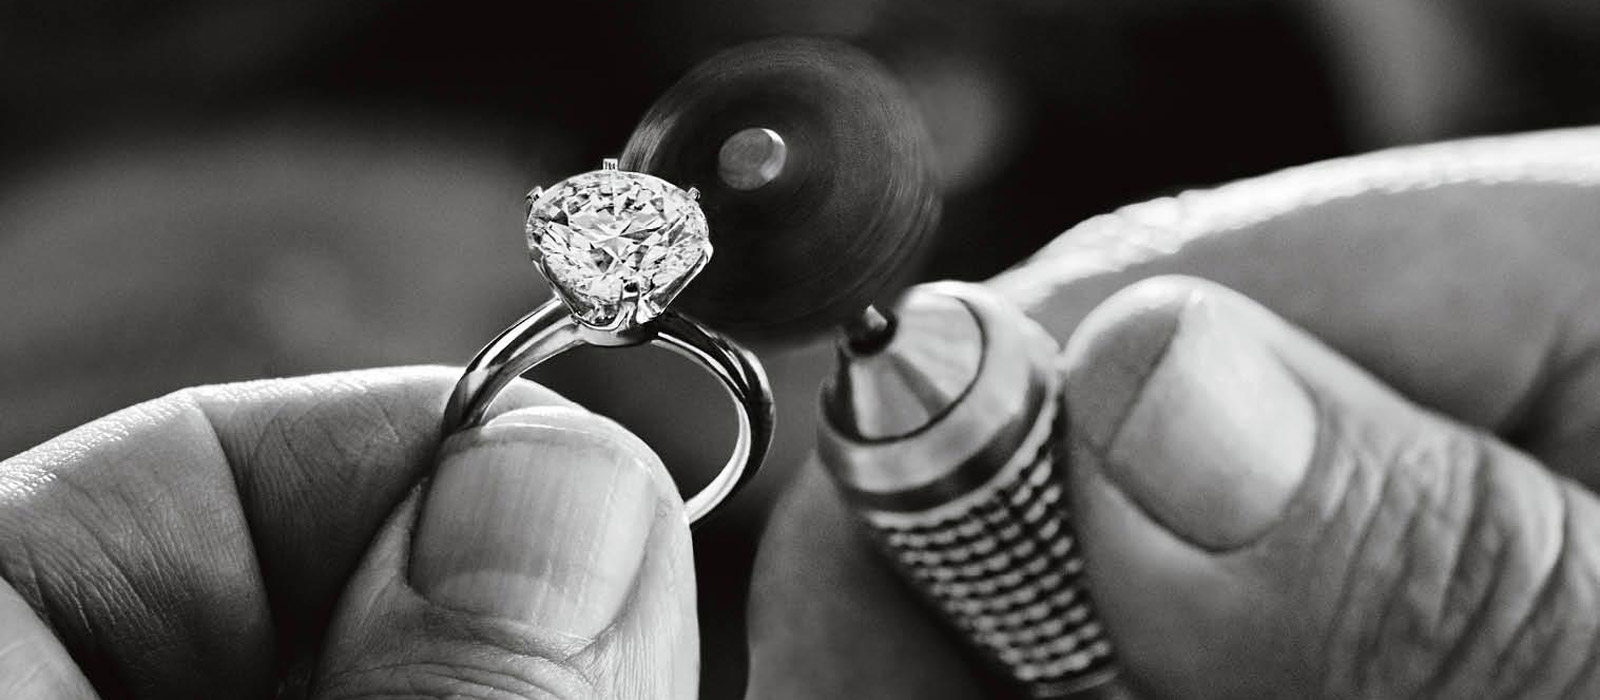 jeane saade - florence jewellery working - ring macro